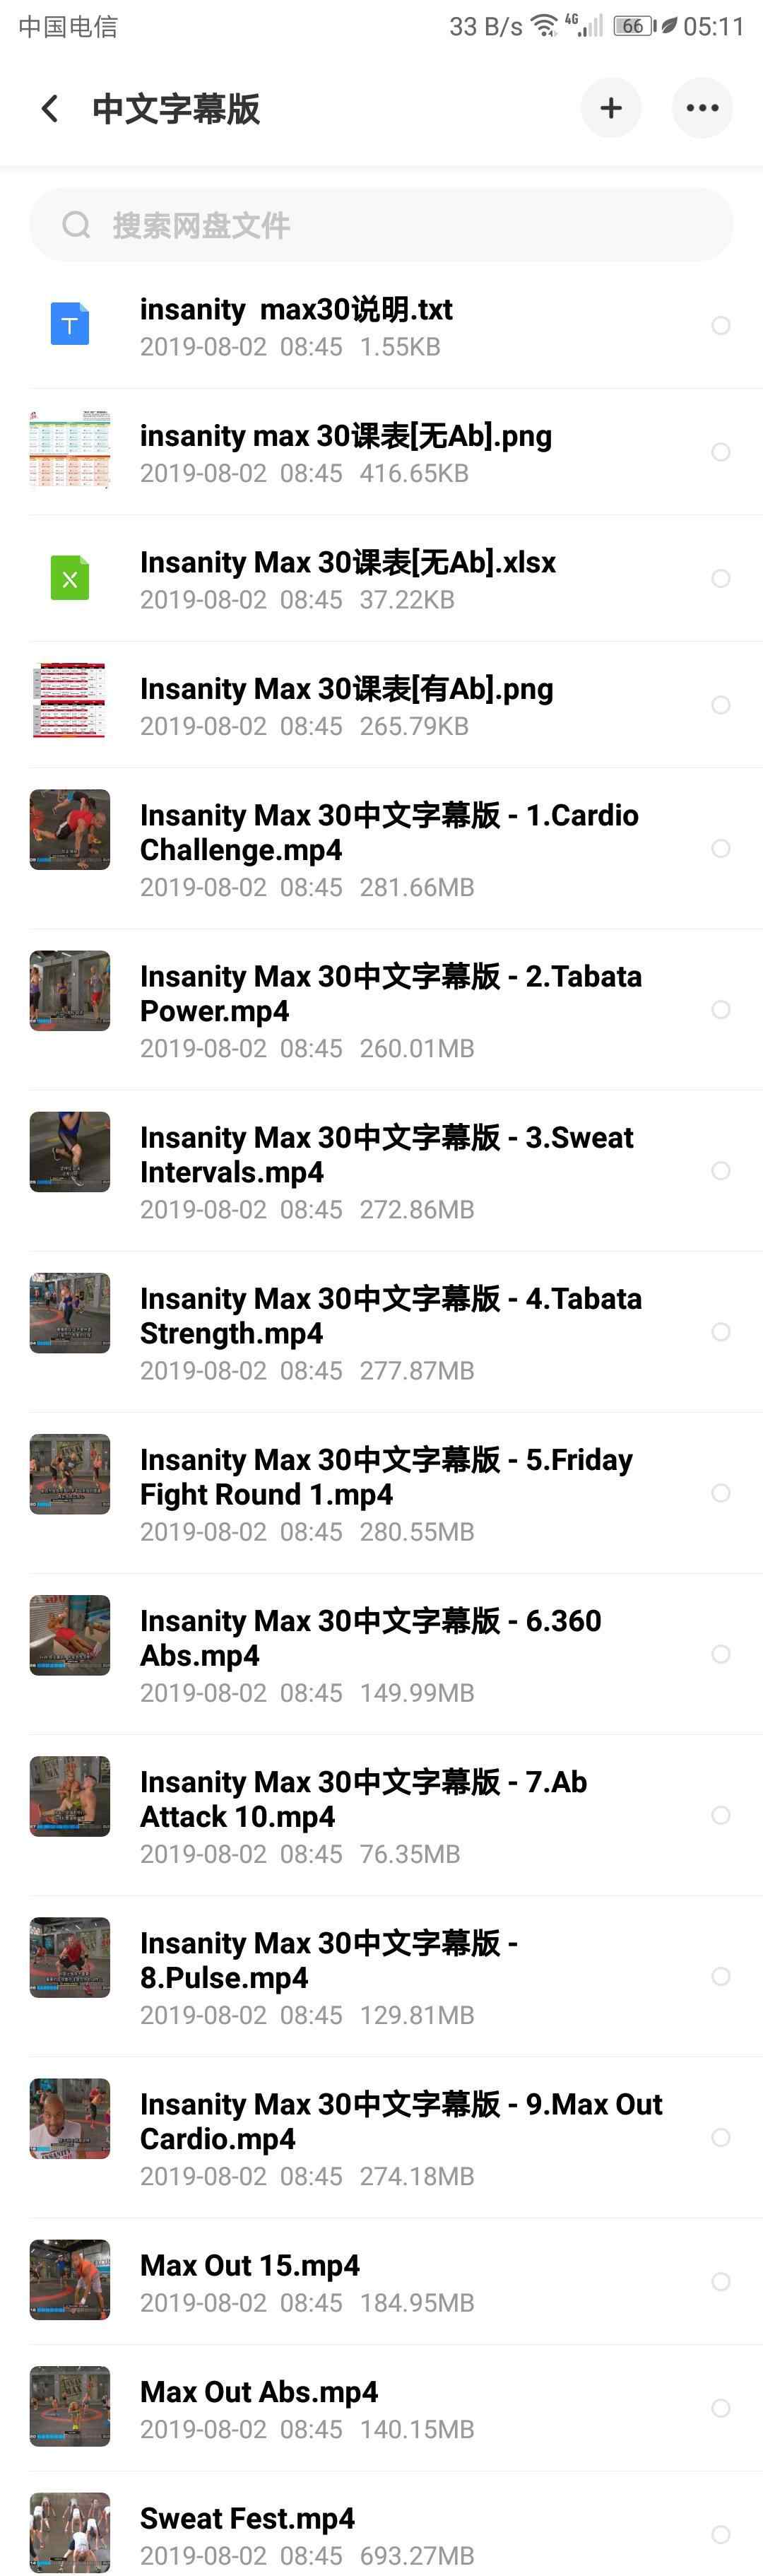 insanity健身全套视频 insanity max 30心得 中文字幕版 附全套视频附课表下载